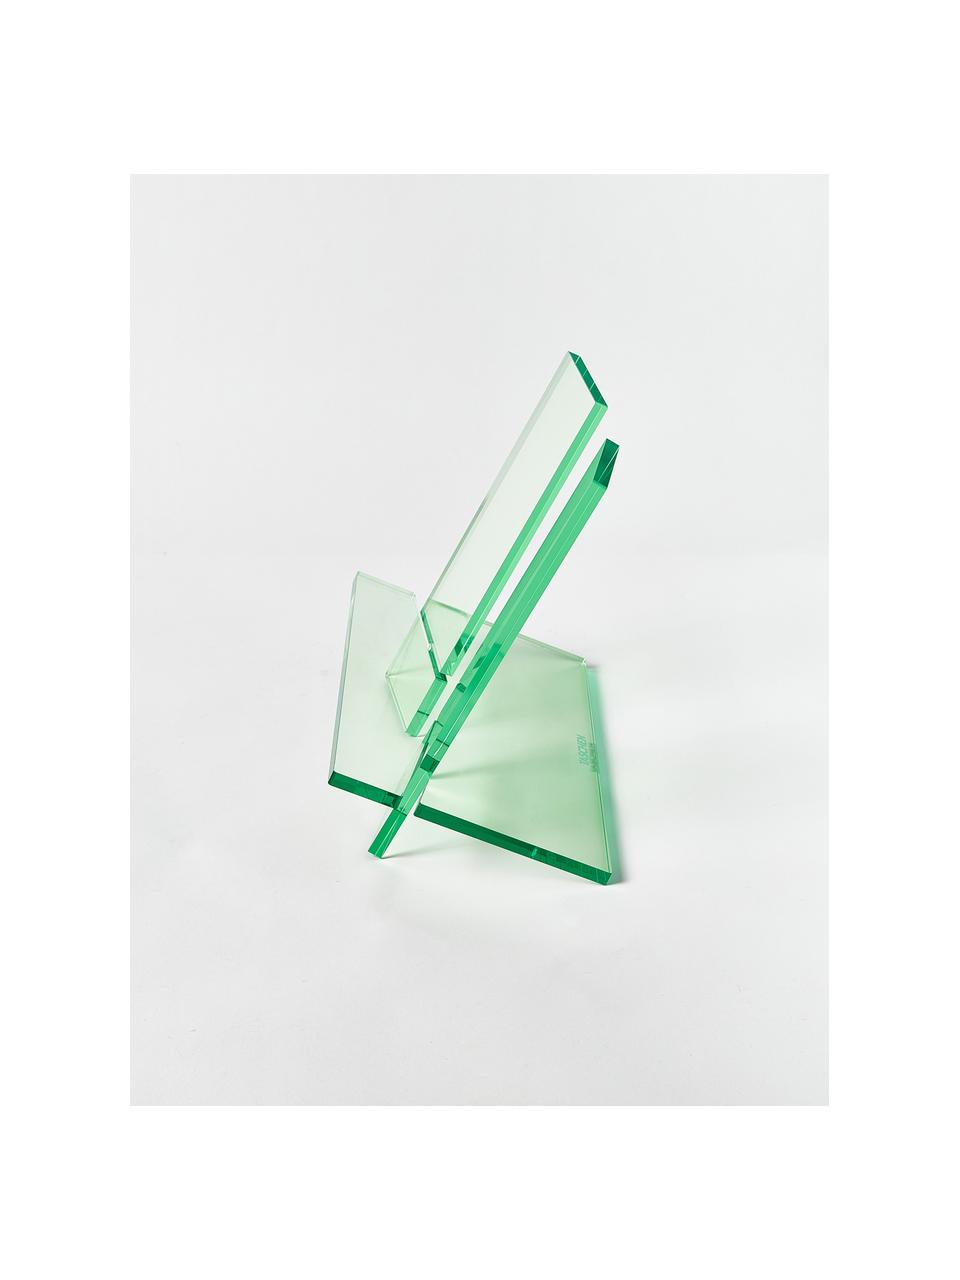 Atril lectura Crystal, 36 x 34 cm, Acrílico, Verde claro transparente, An 36 x Al 34 cm